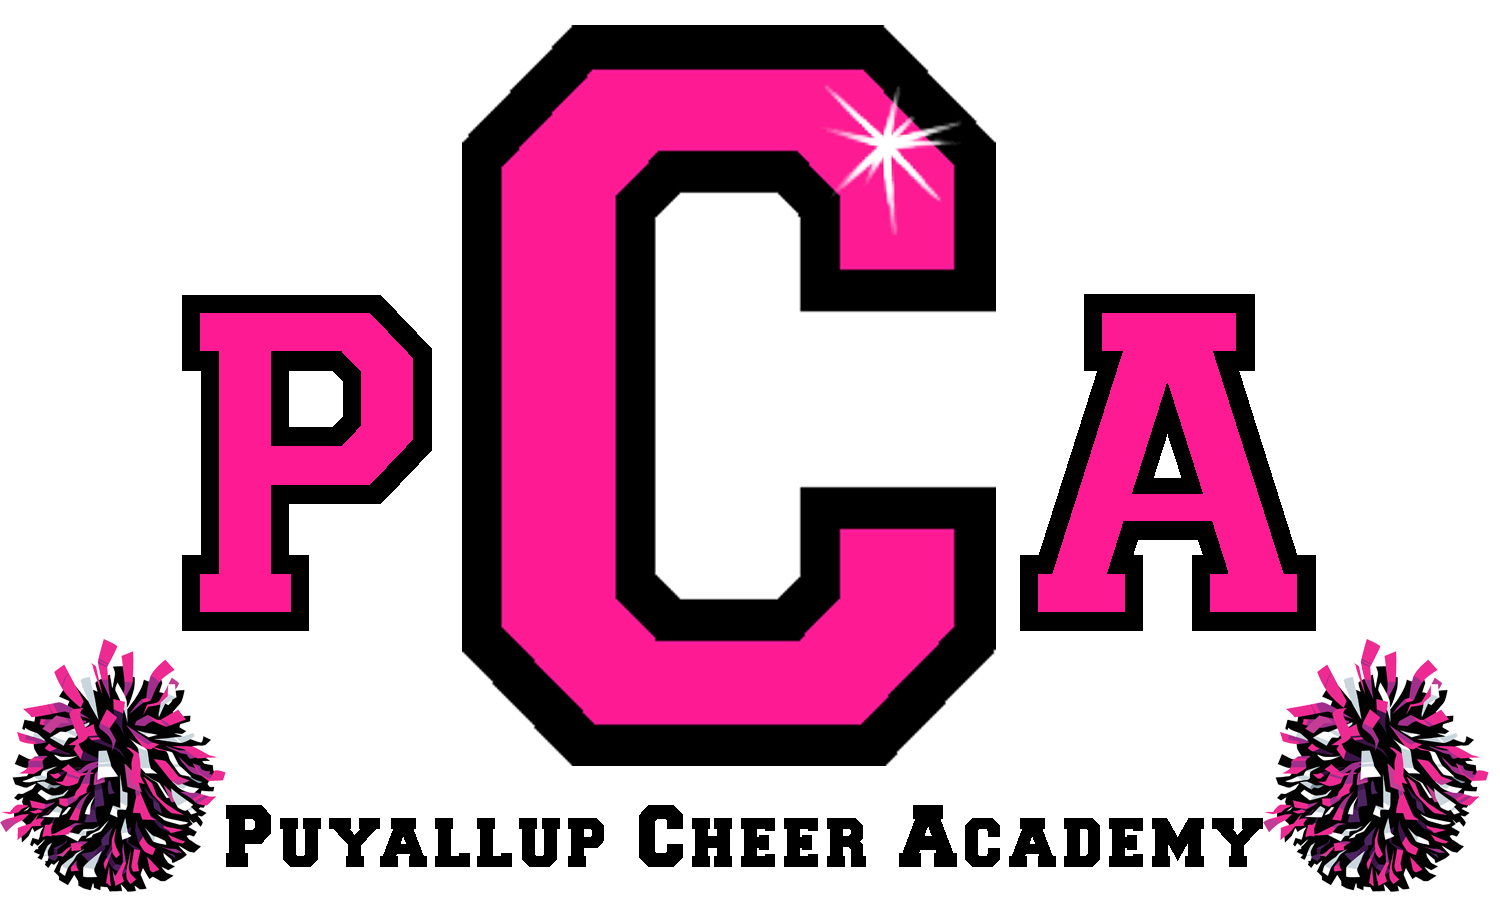 Puyallup Cheer Academy